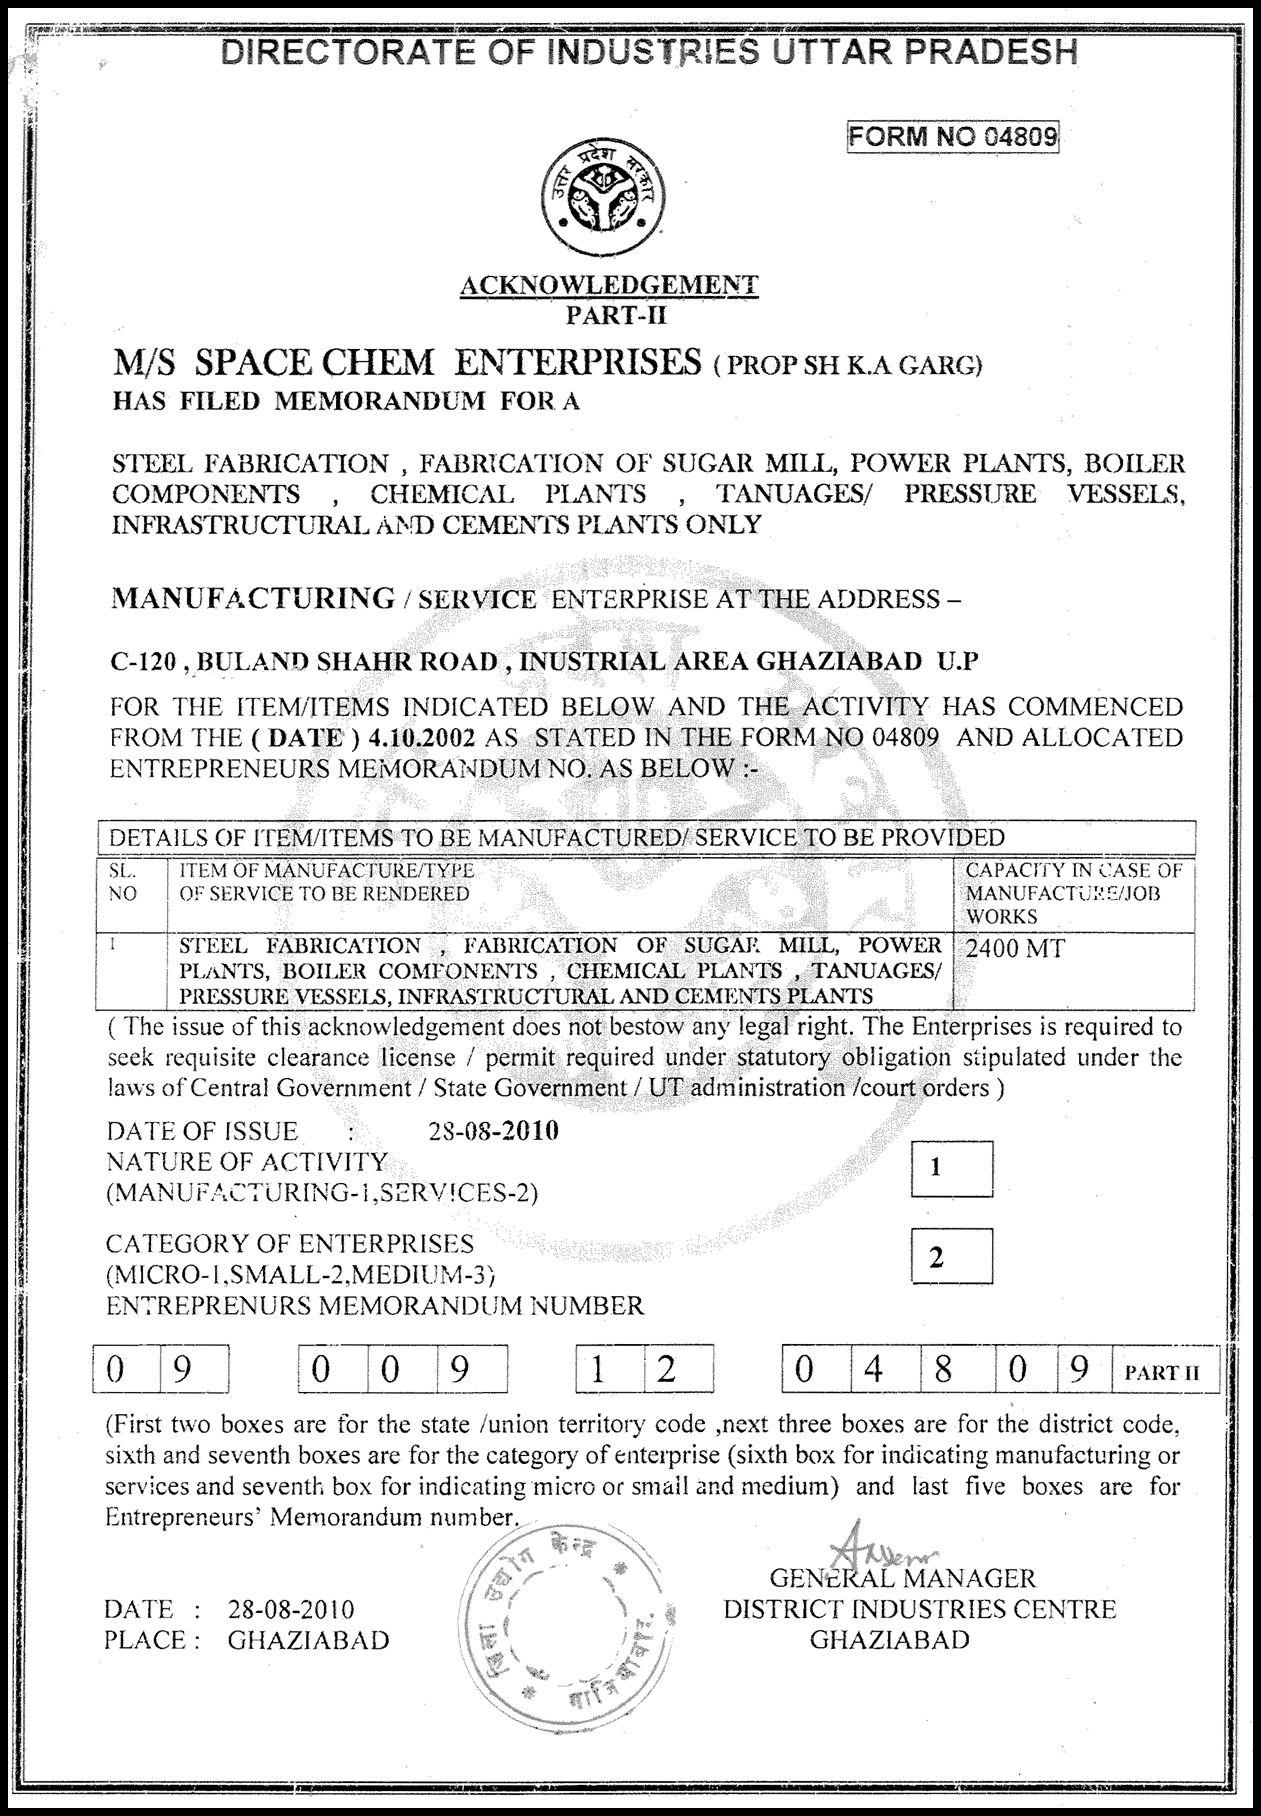 Registration with Directorate of Industries Uttar Pradesh